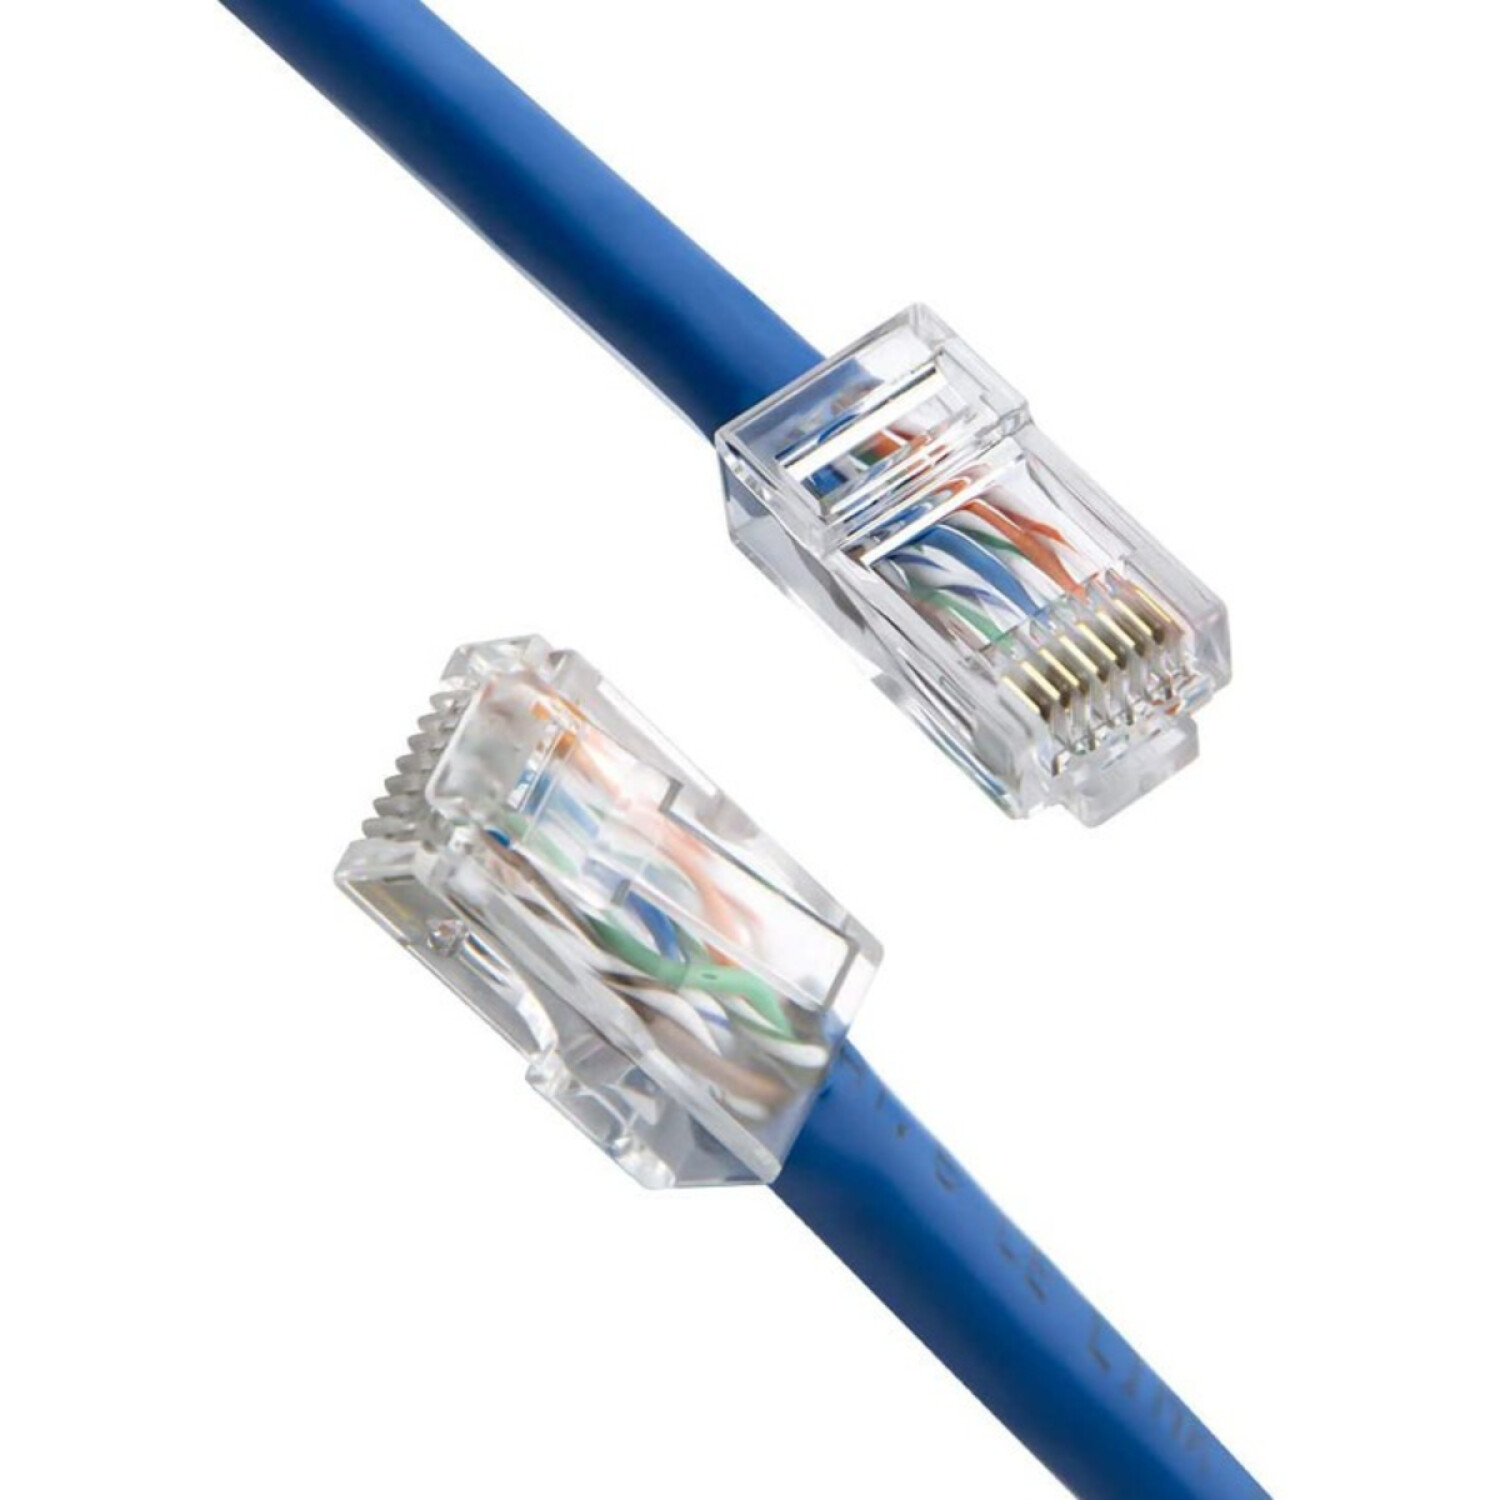 Cable Red Lan Rj45 Utp 20 Metros Internet Excelente Calidad — Atrix